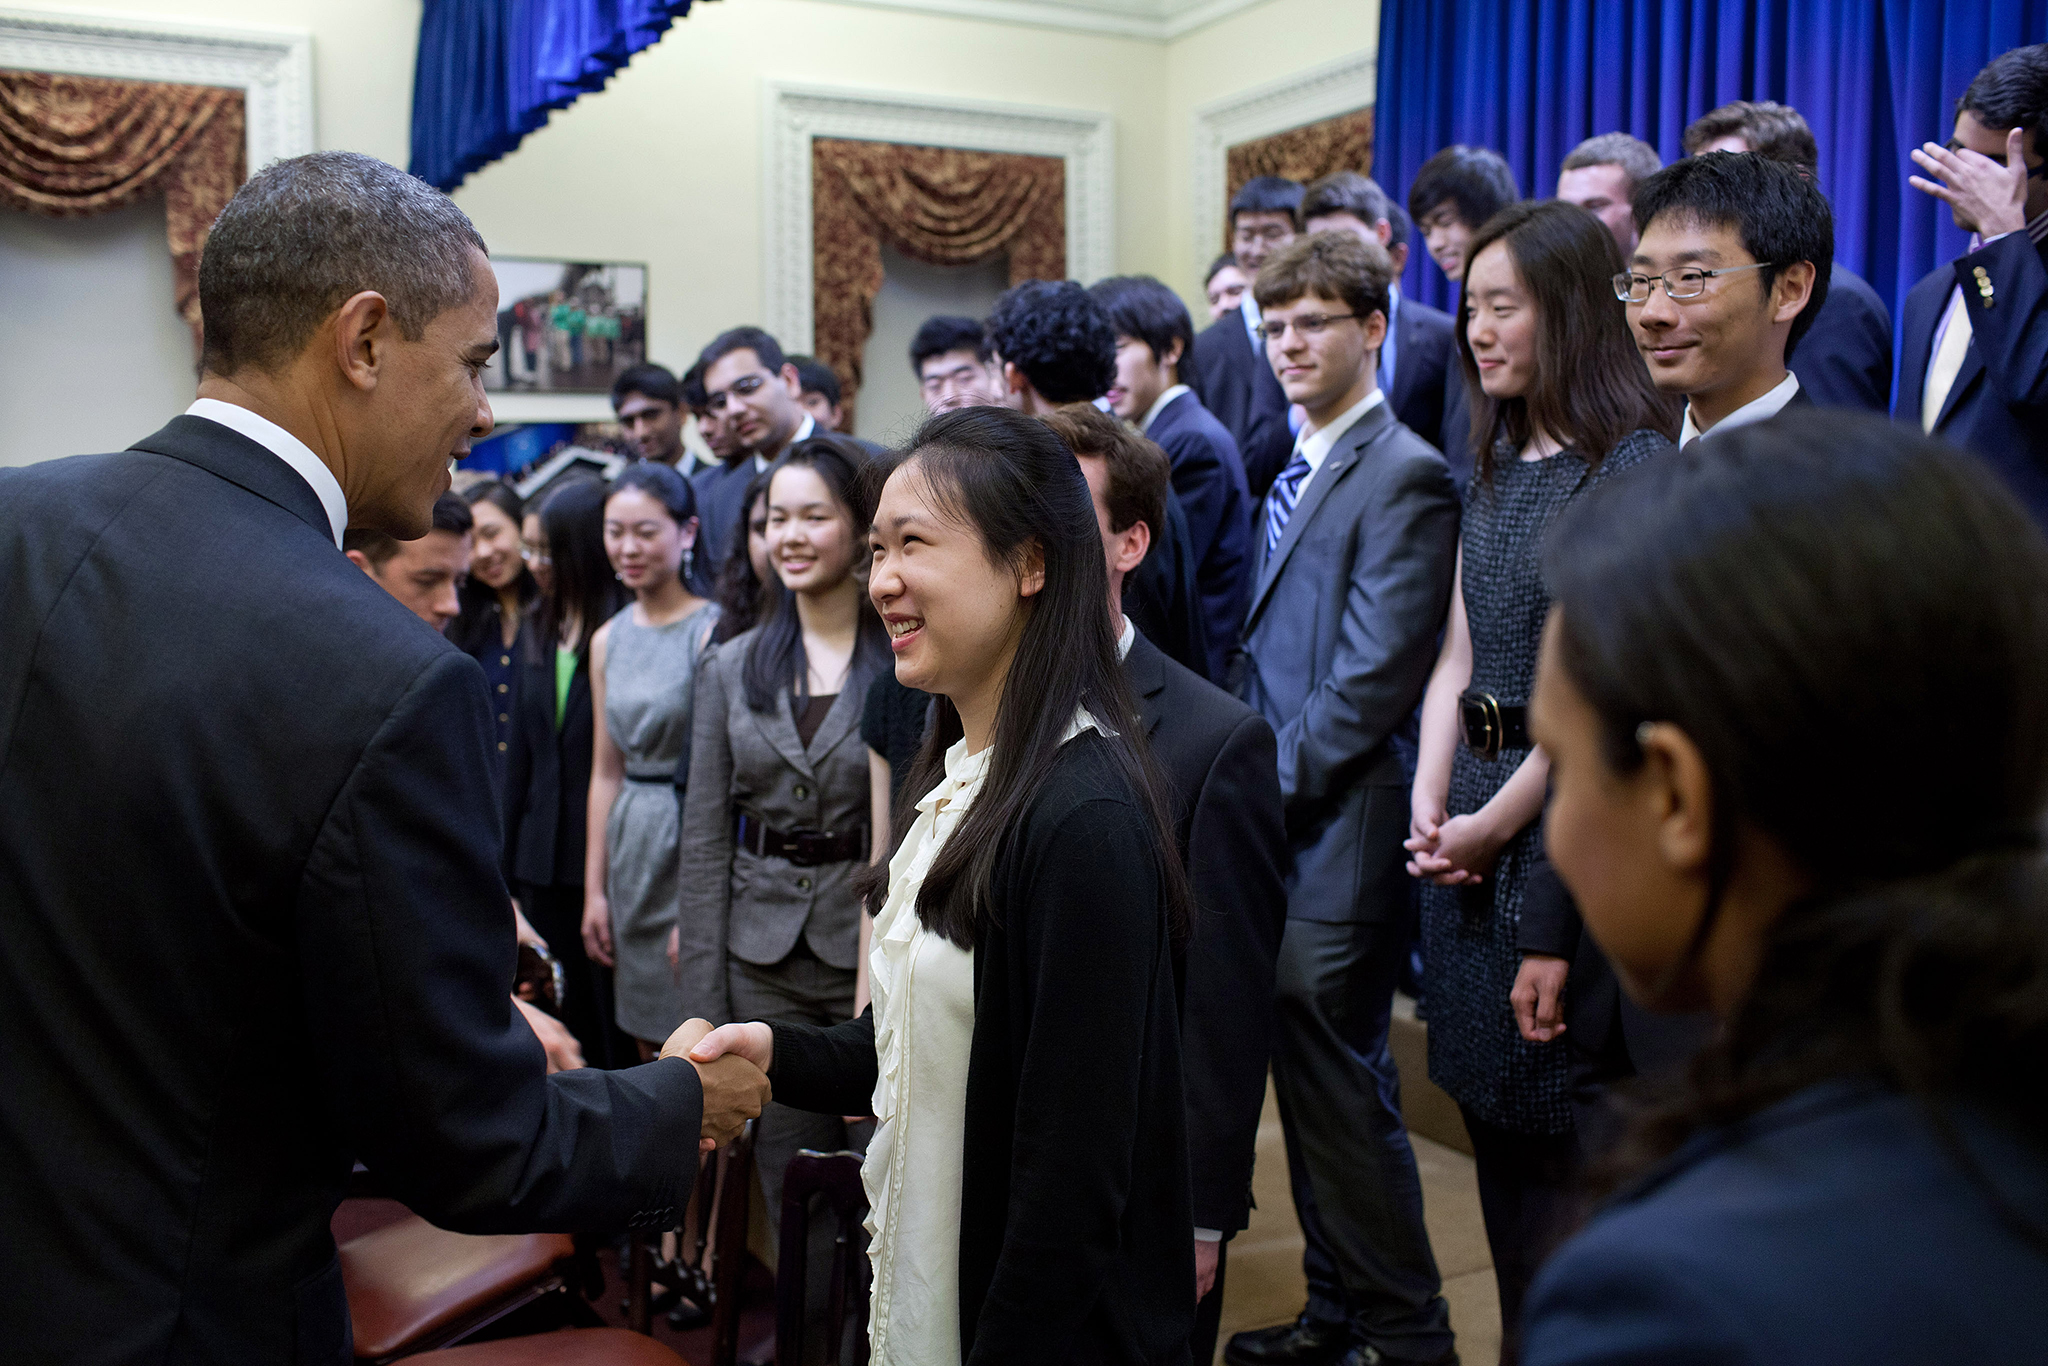 STS finalist Zizi Yu shakes hands with President Obama